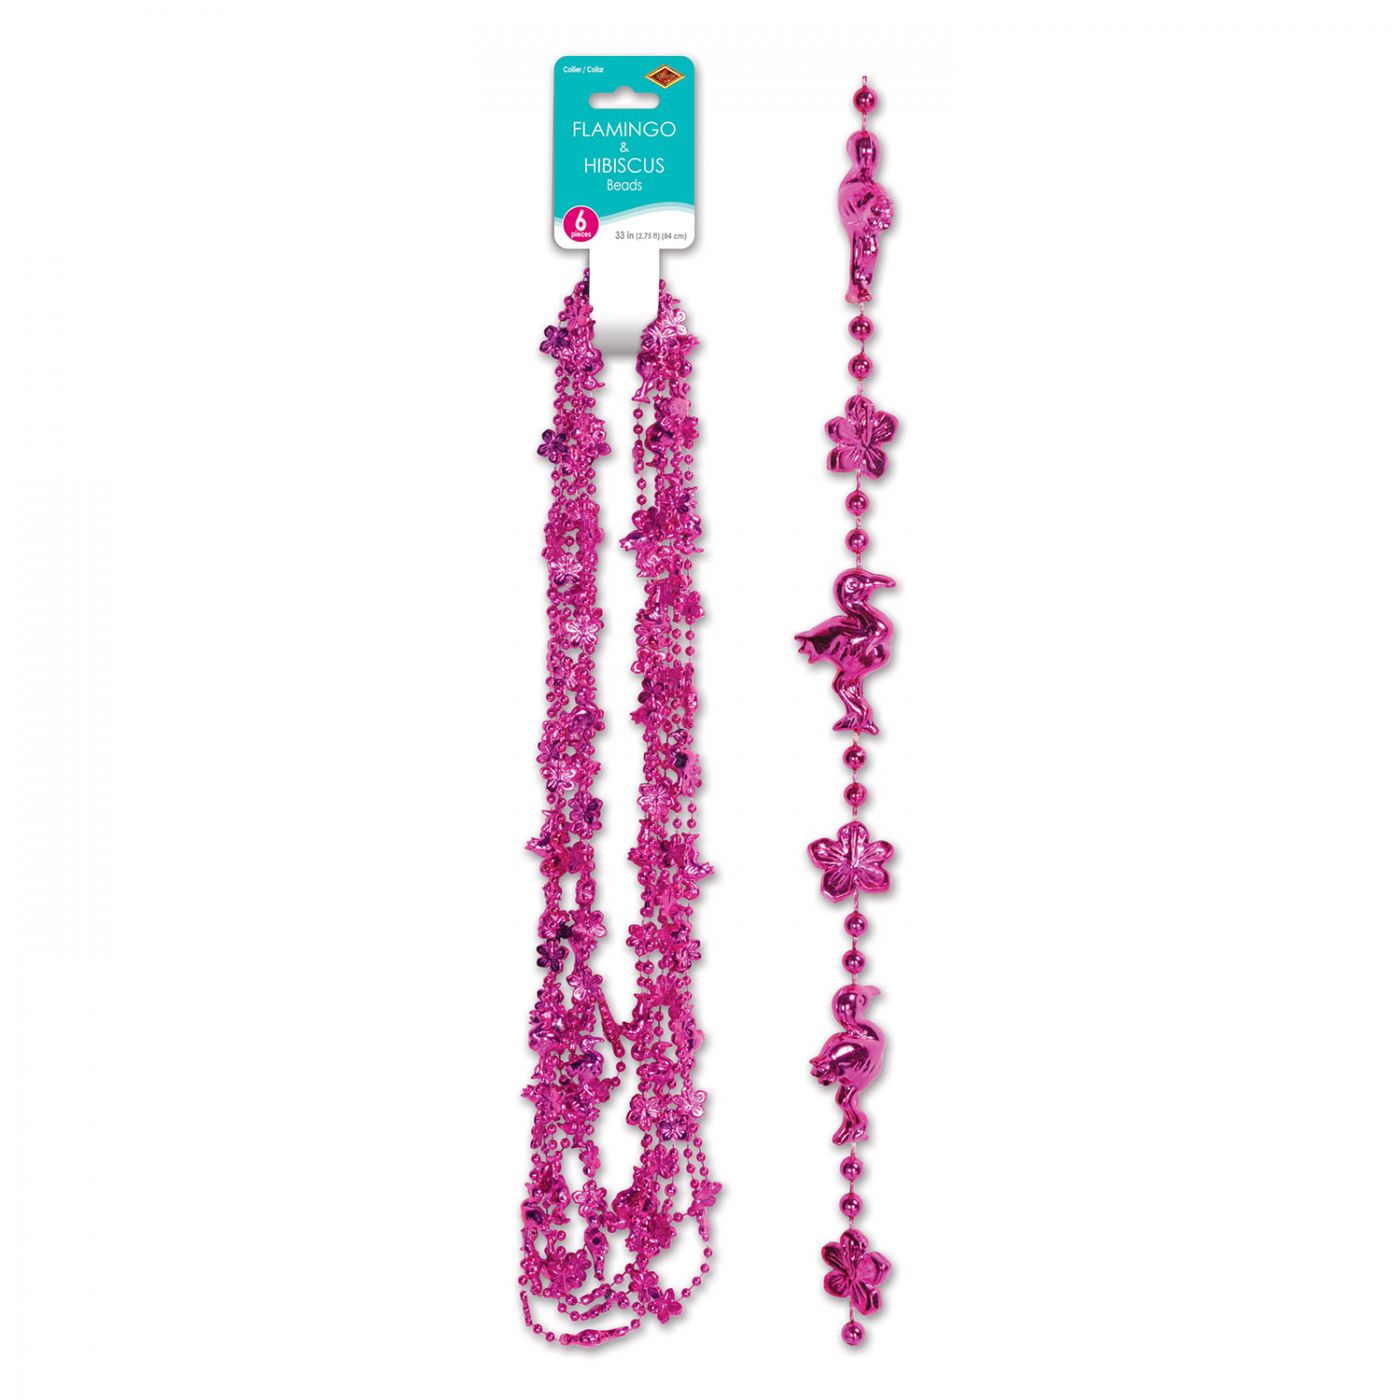 Flamingo & Hibiscus Beads (12) image